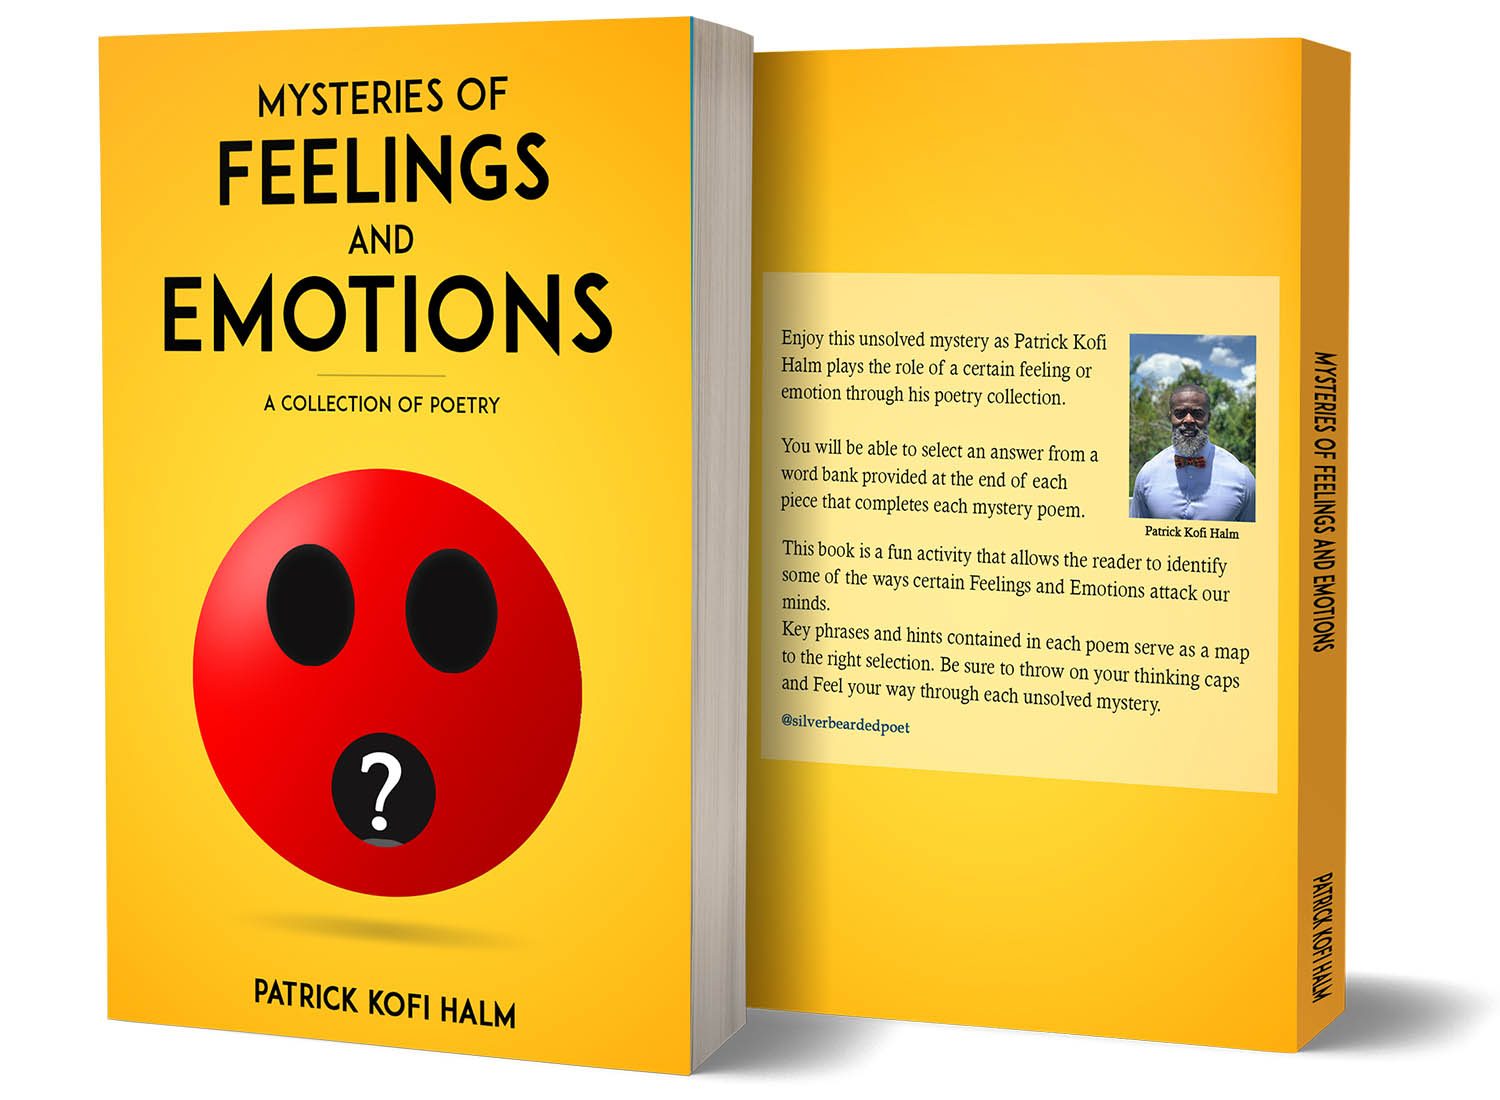 bookconsilio-portfolio-MYSTERIES OF FEELINGS AND EMOTIONS-paperbackcover-bookckoverdesign